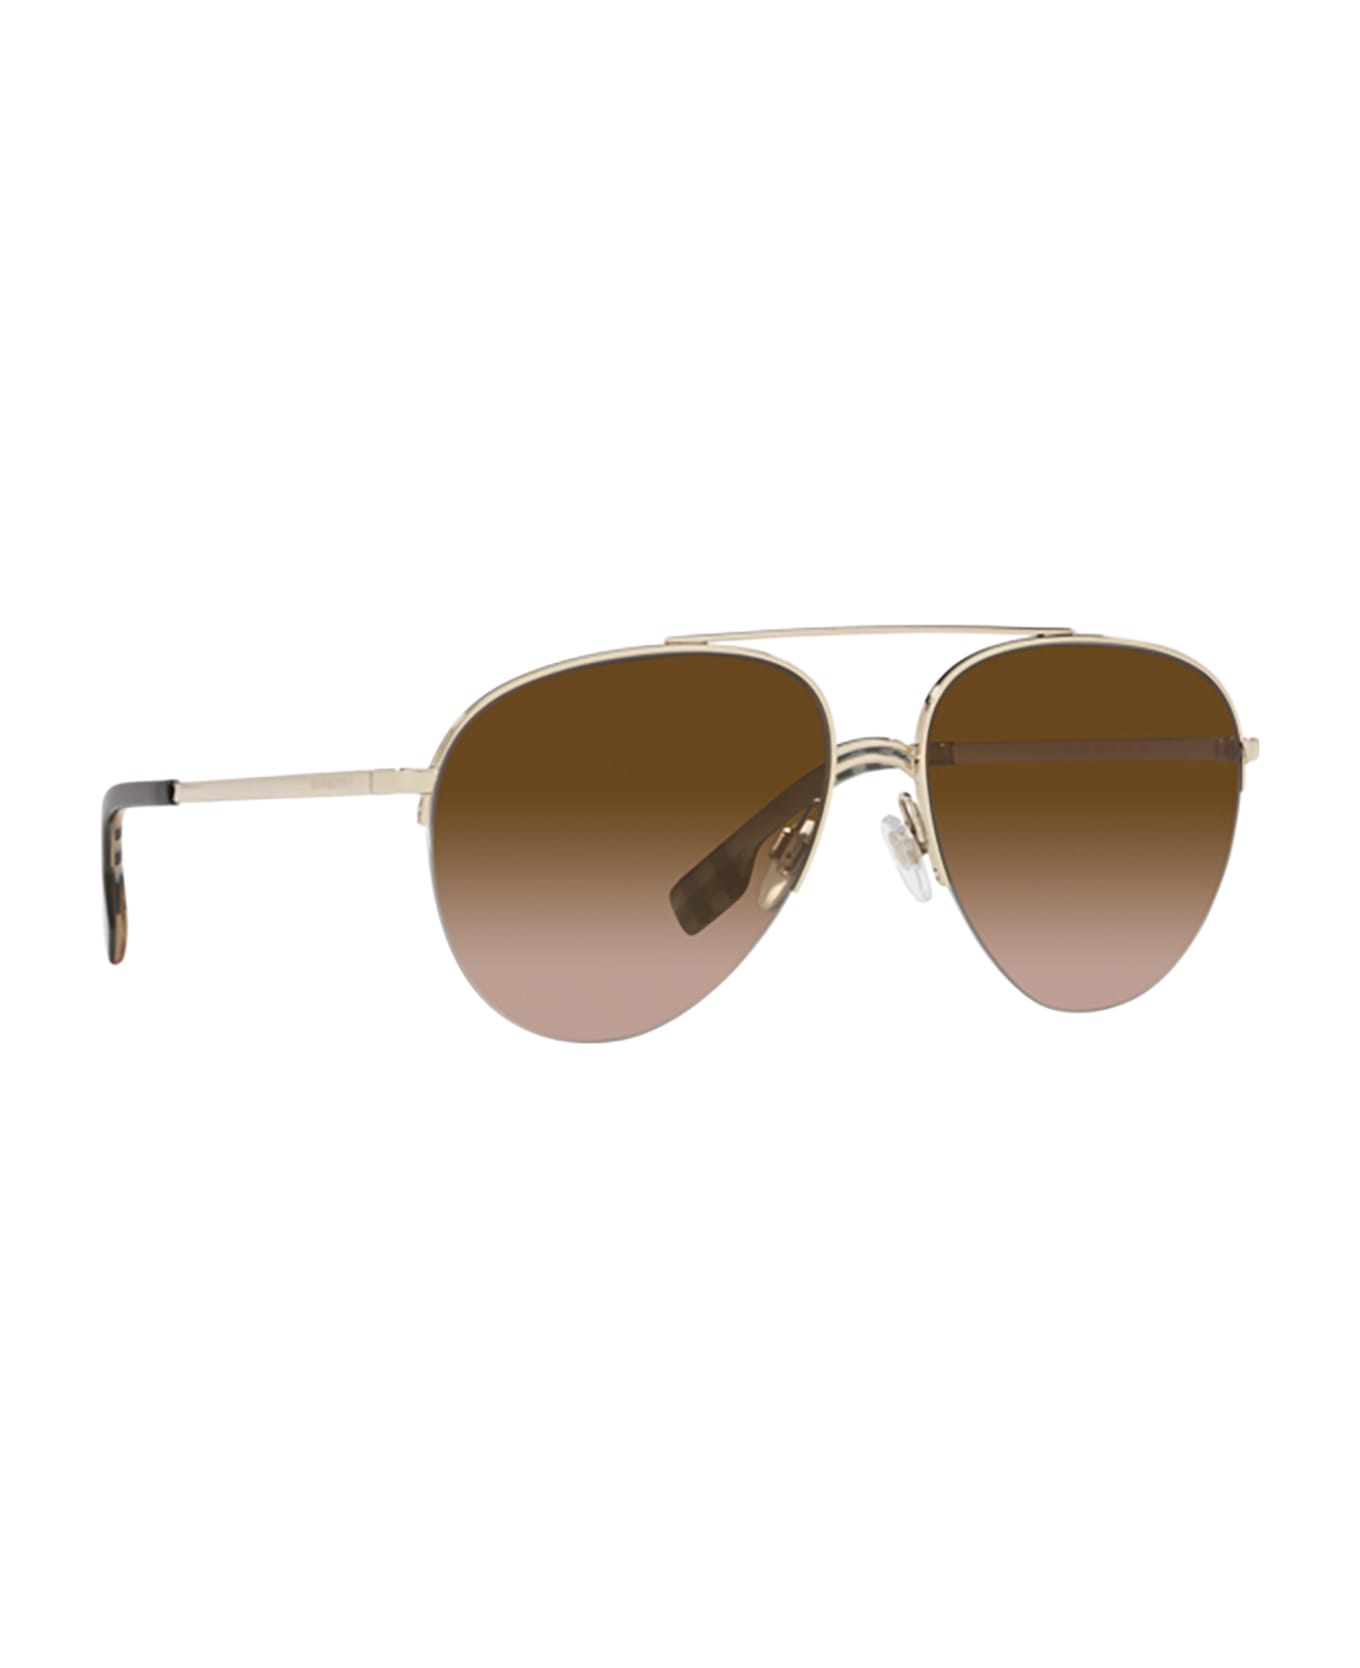 Burberry Eyewear Be3113 Light Gold Sunglasses - Light Gold